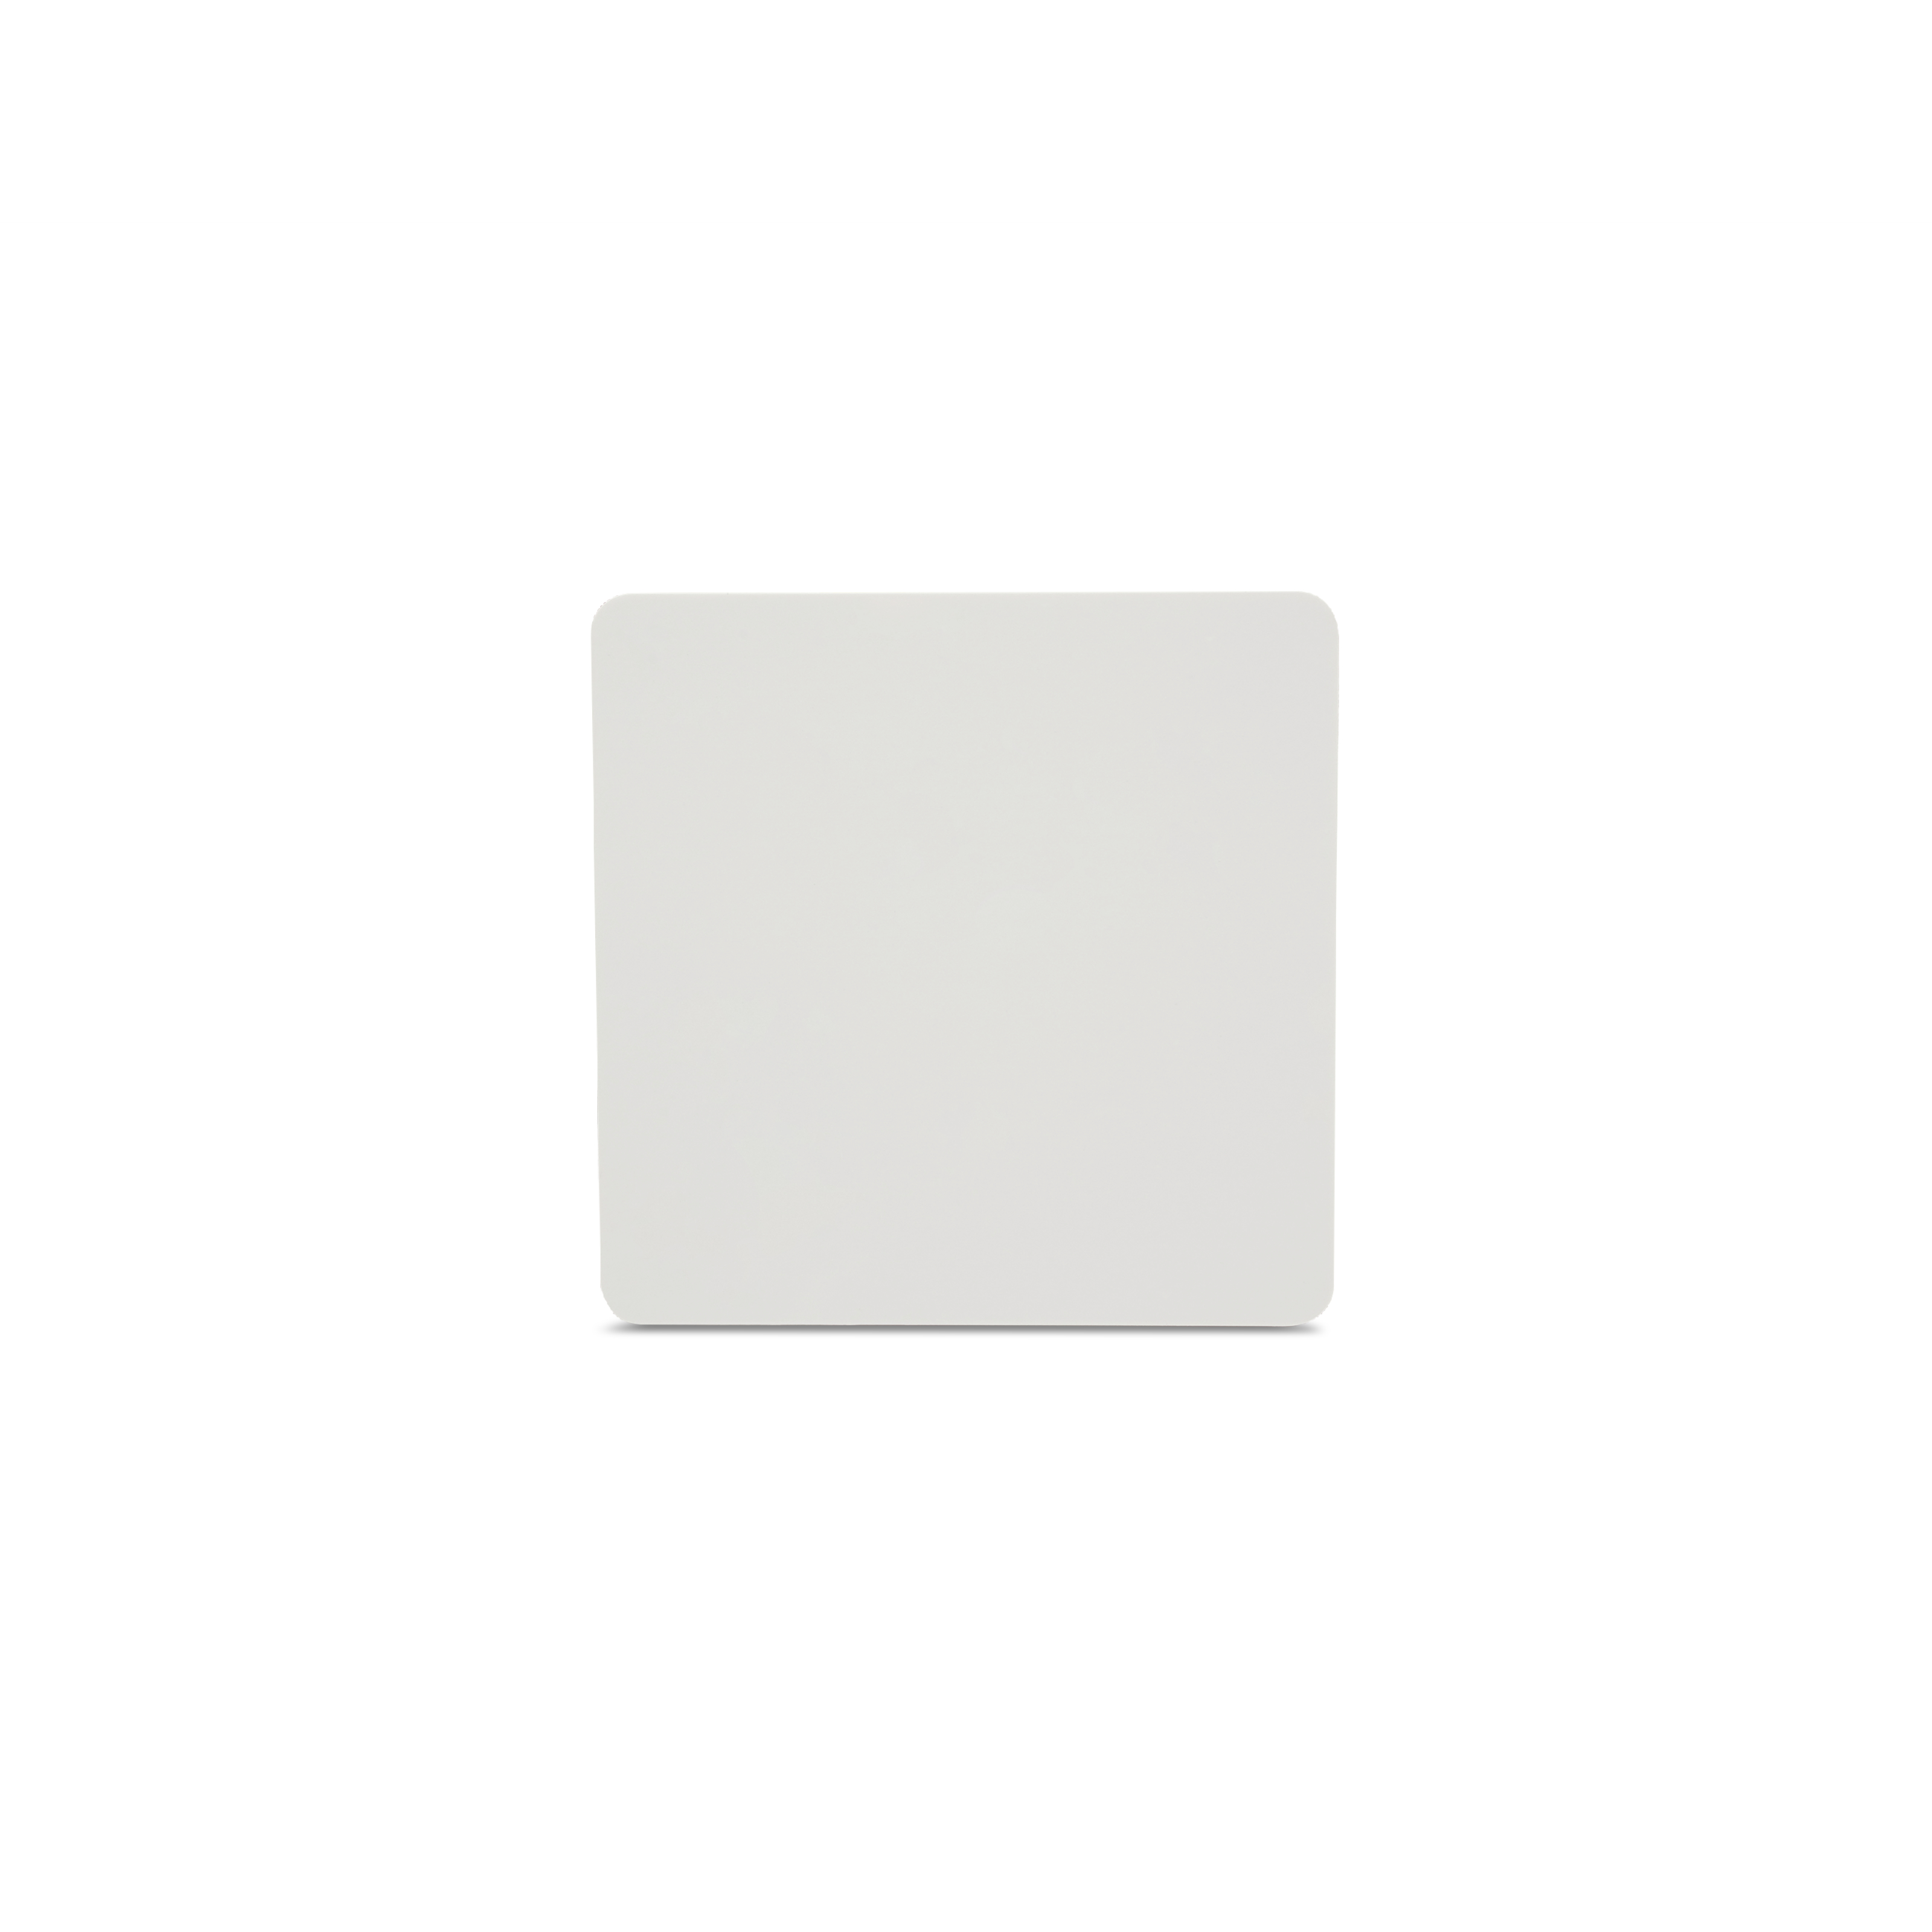 NFC Sticker PVC On-Metal - 52 x 52 mm - NTAG213 - 180 Byte - white